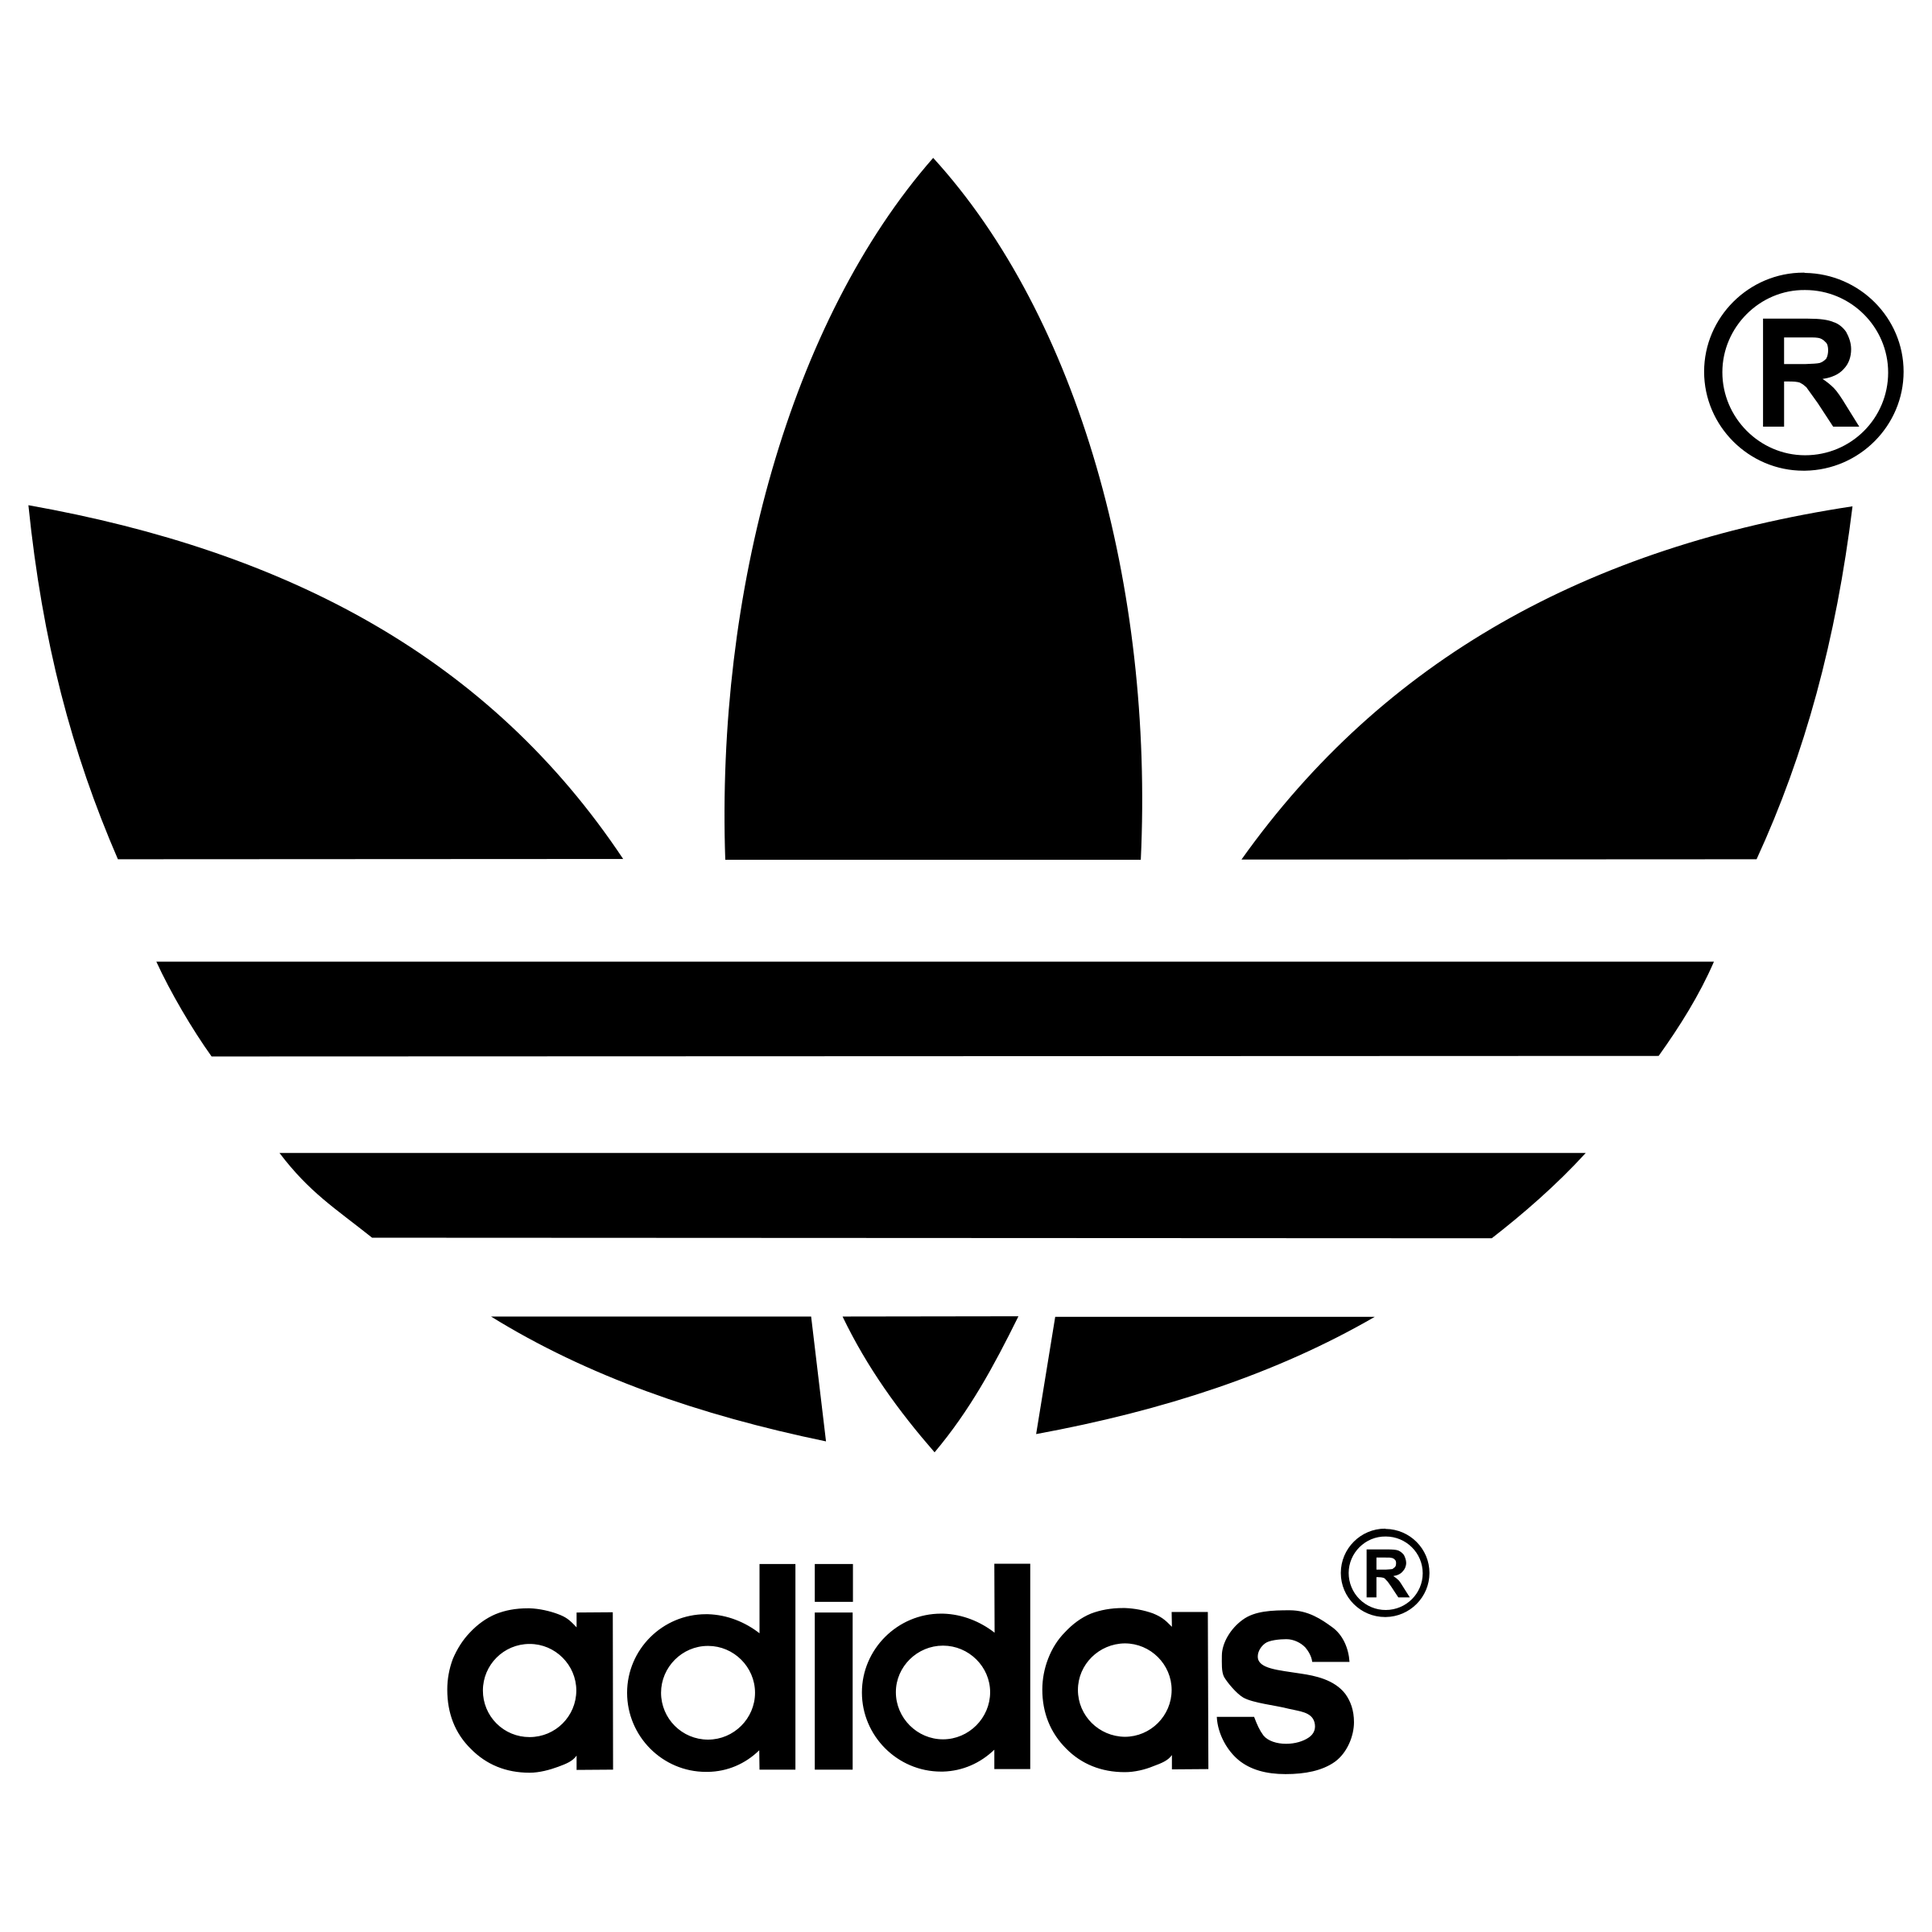 Whiteadidas Logo - Adidas Logo PNG Transparent & SVG Vector - Freebie Supply